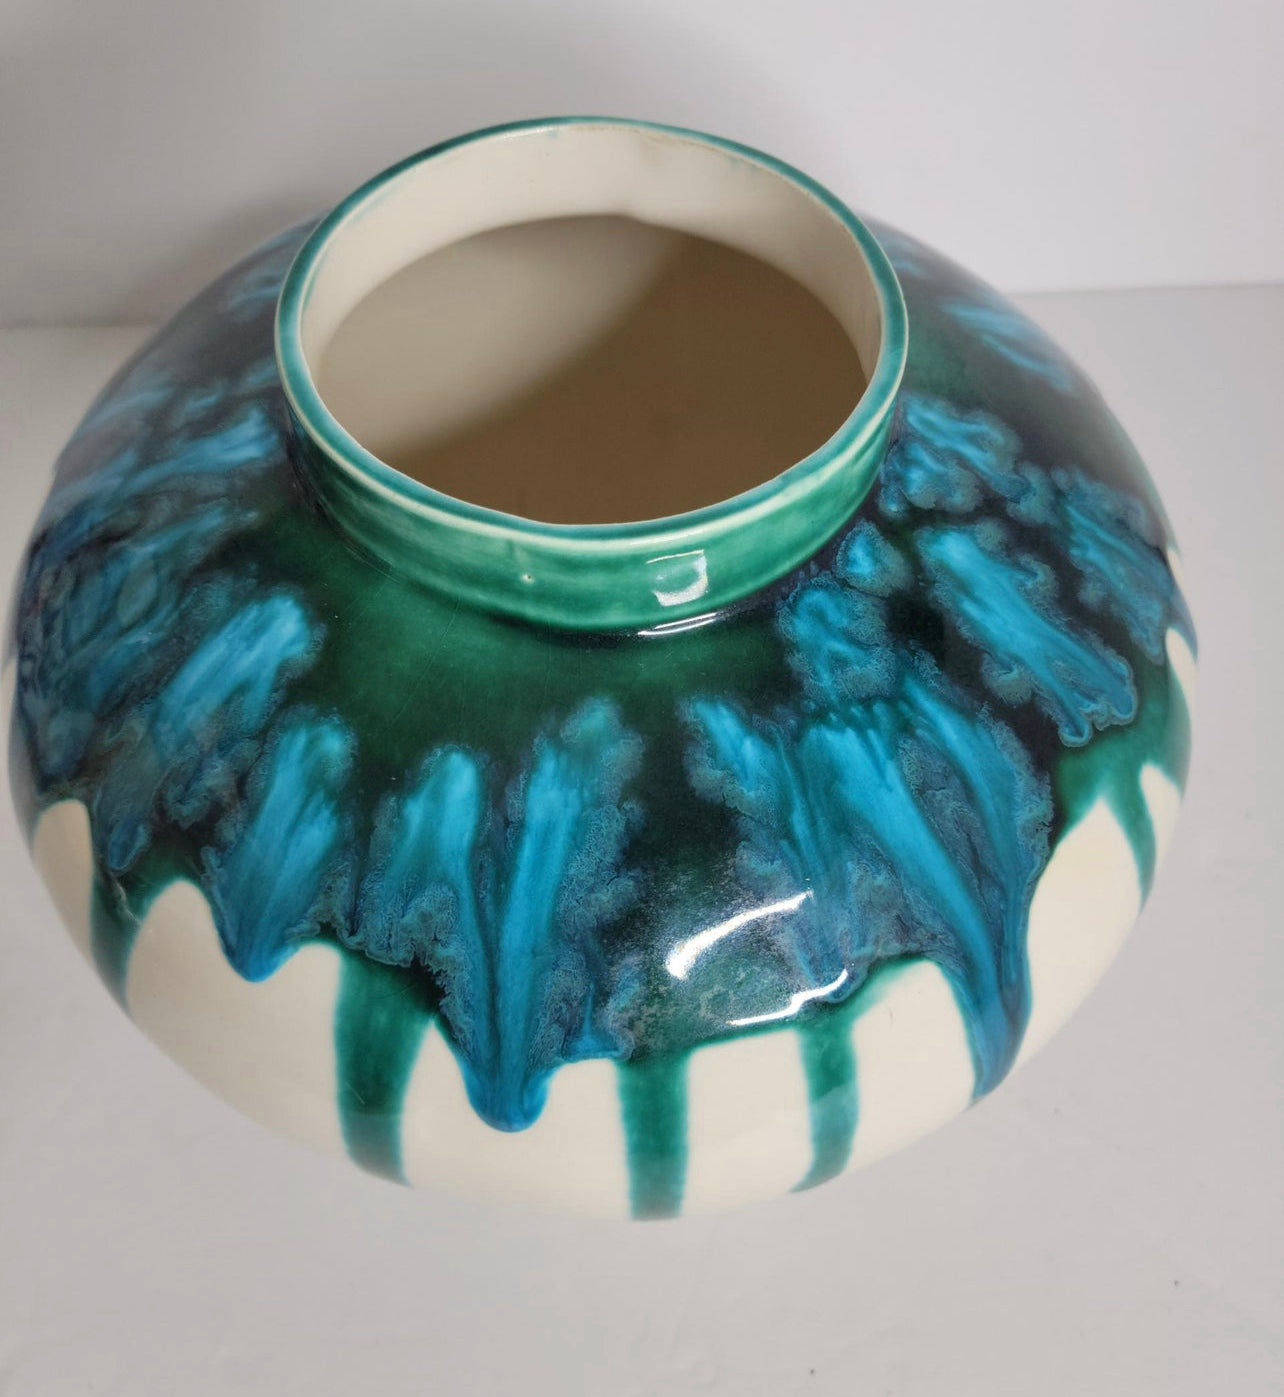 1960's Vintage Studio Pottery Drip Glaze Vase